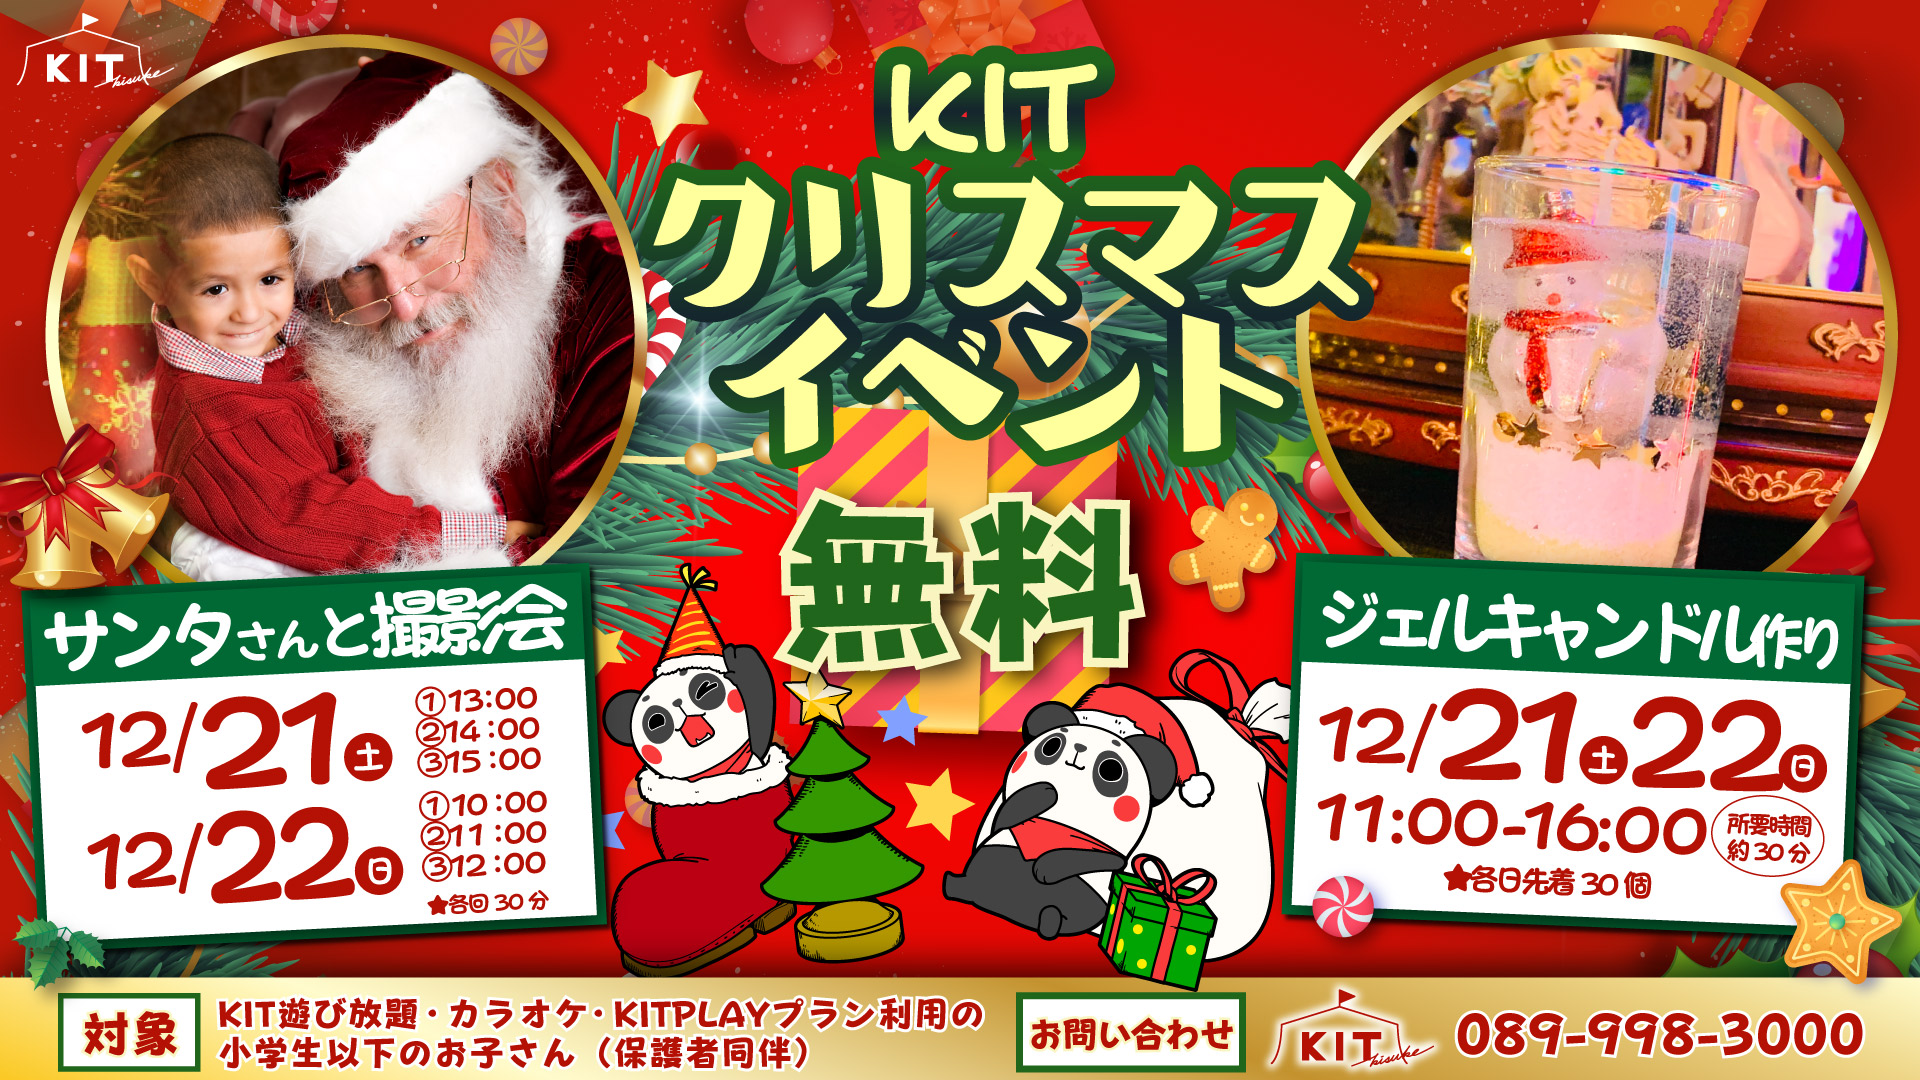 Kit クリスマス イベント開催 ニュース イベント情報 Kit キット キスケ株式会社